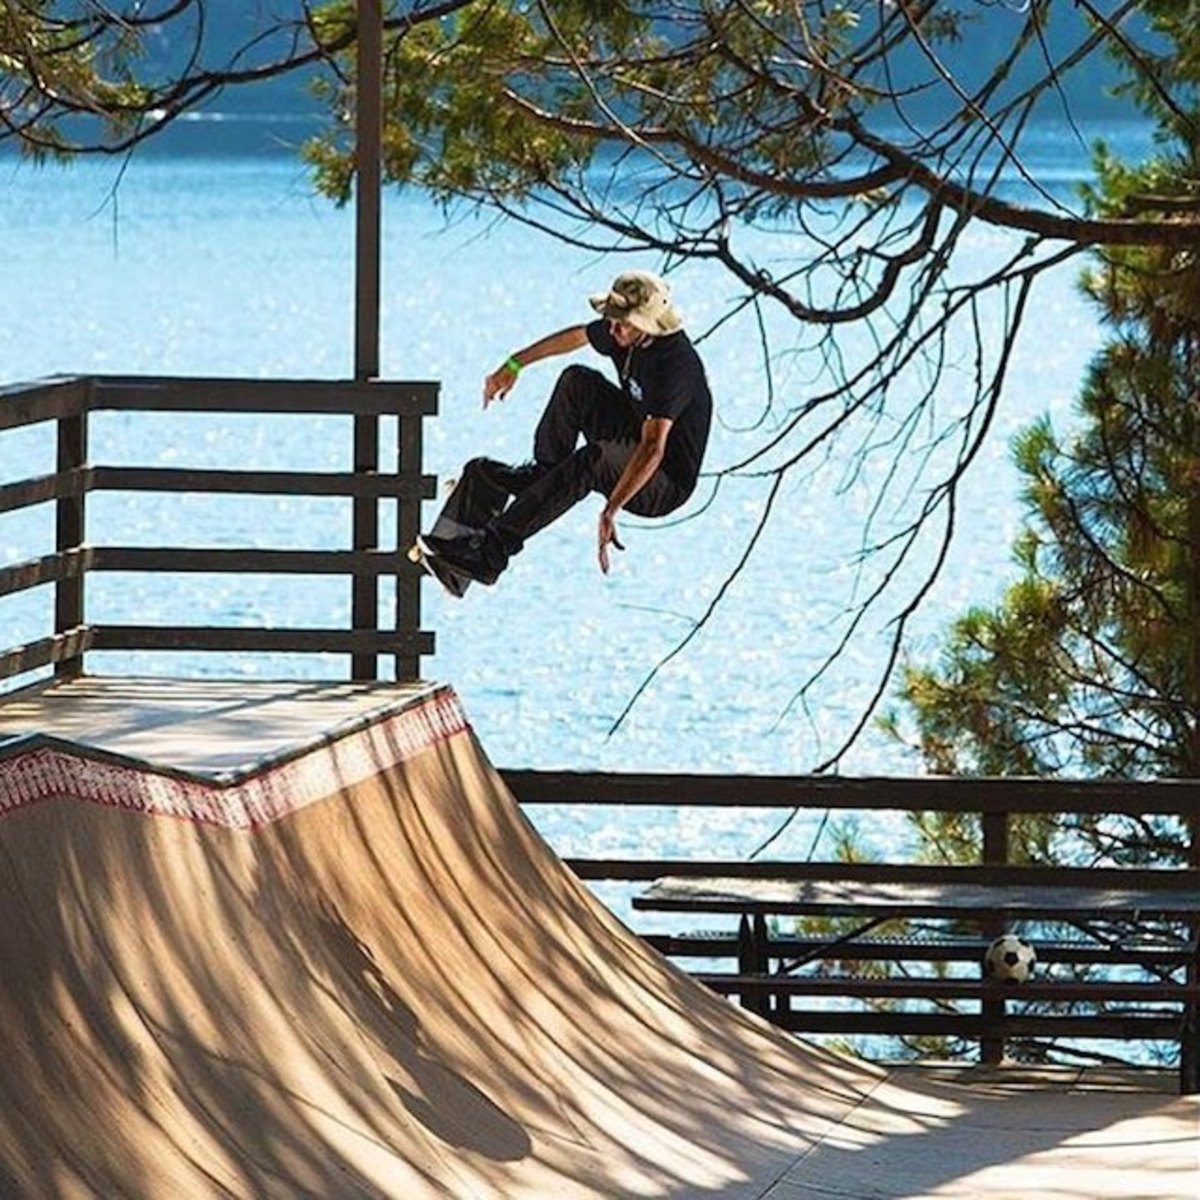 Sequoia Skate Park